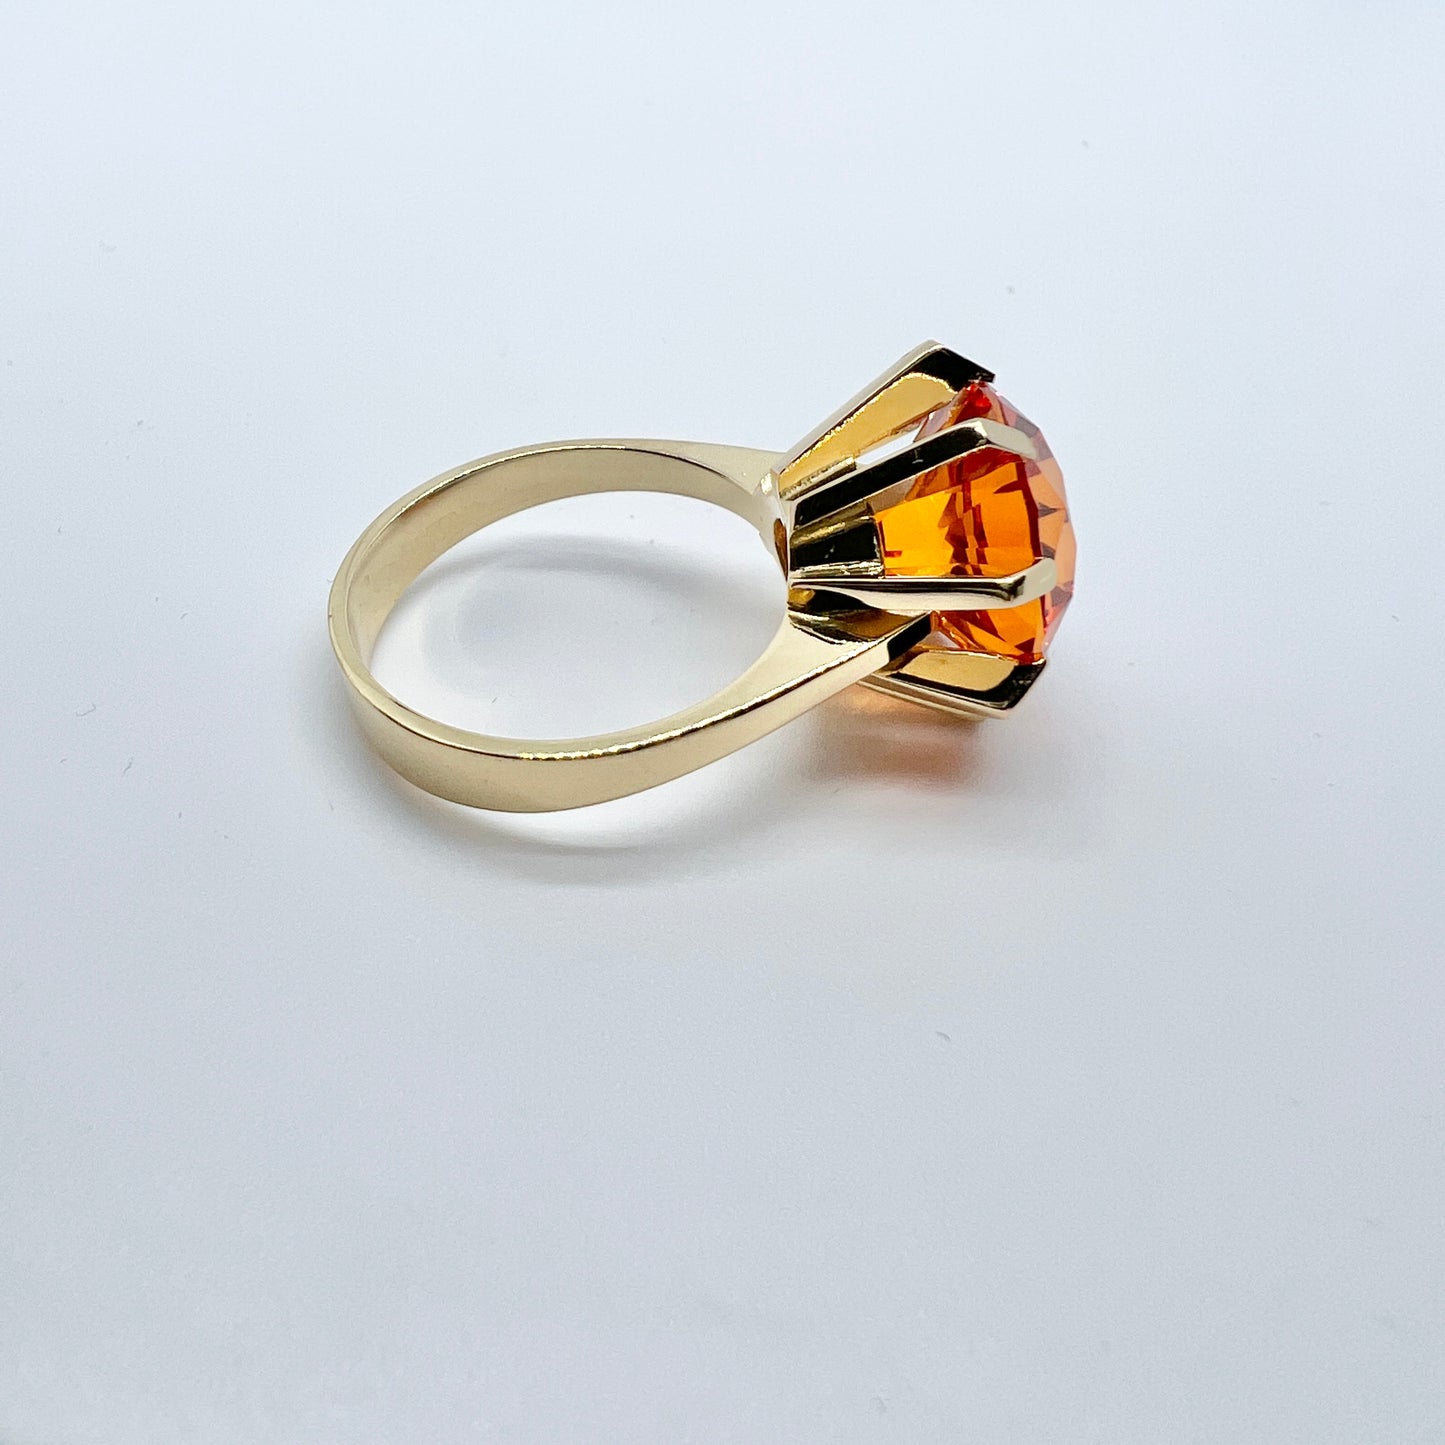 Ceson, Sweden 1973. Vintage 18k Gold Intense Orange Synthetic Sapphire Ring.